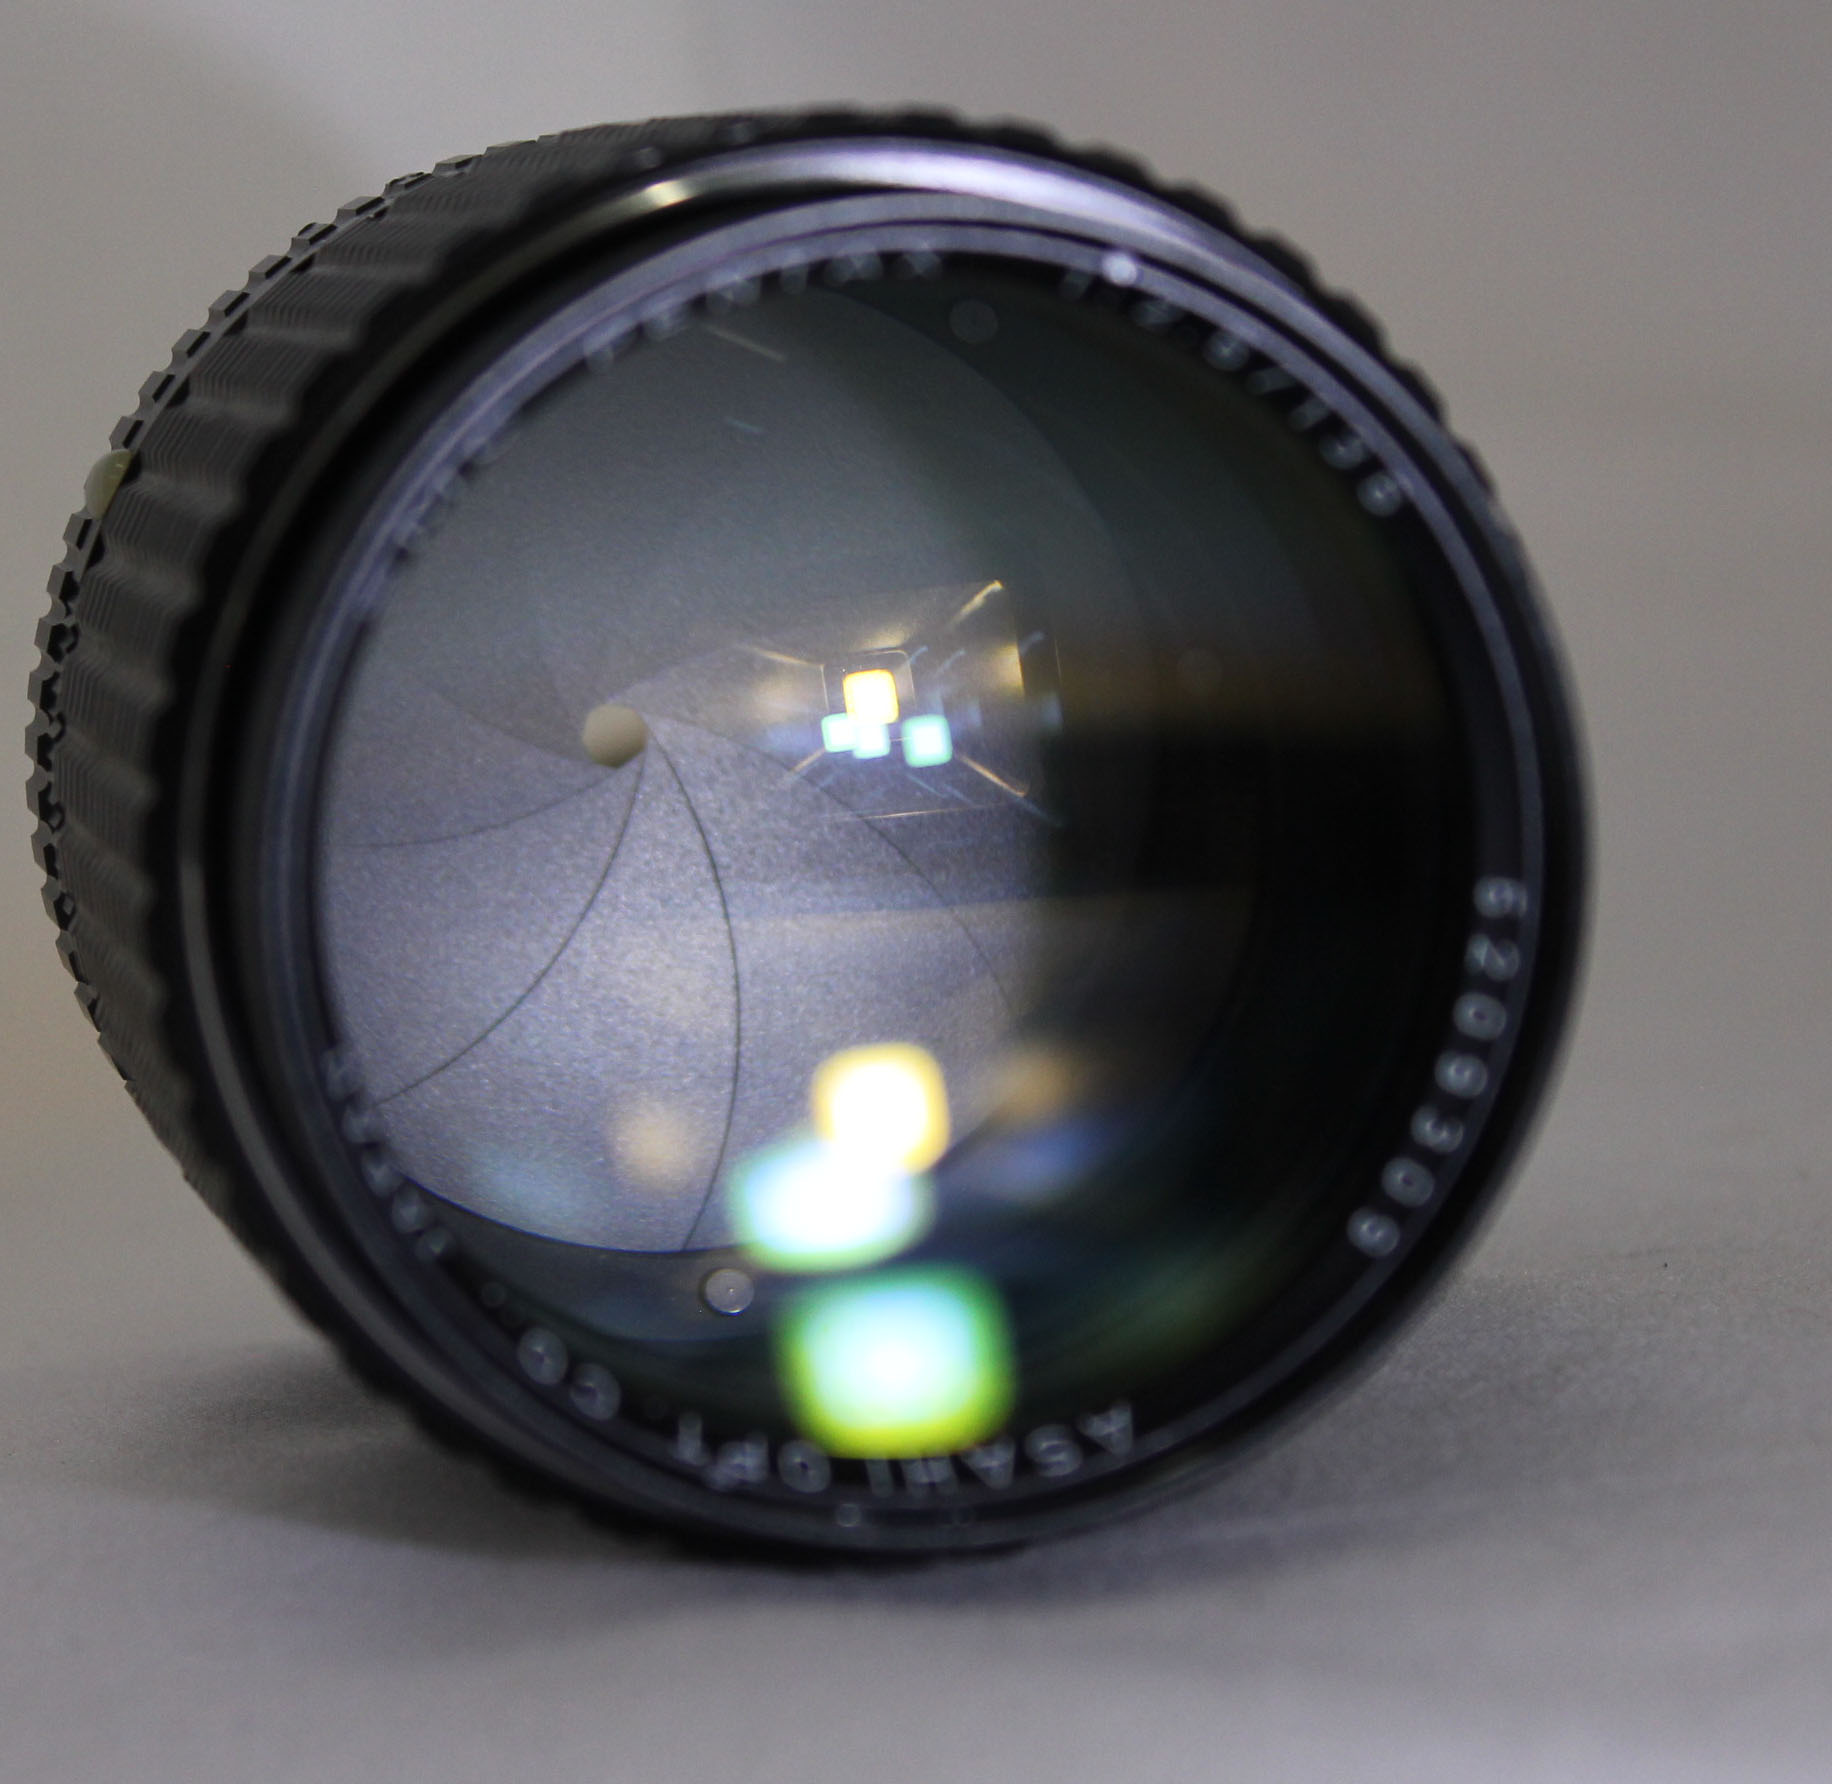  Pentax SMC PENTAX 135mm F/2.5 MF K Mount Lens with Hood from Japan  Photo 7